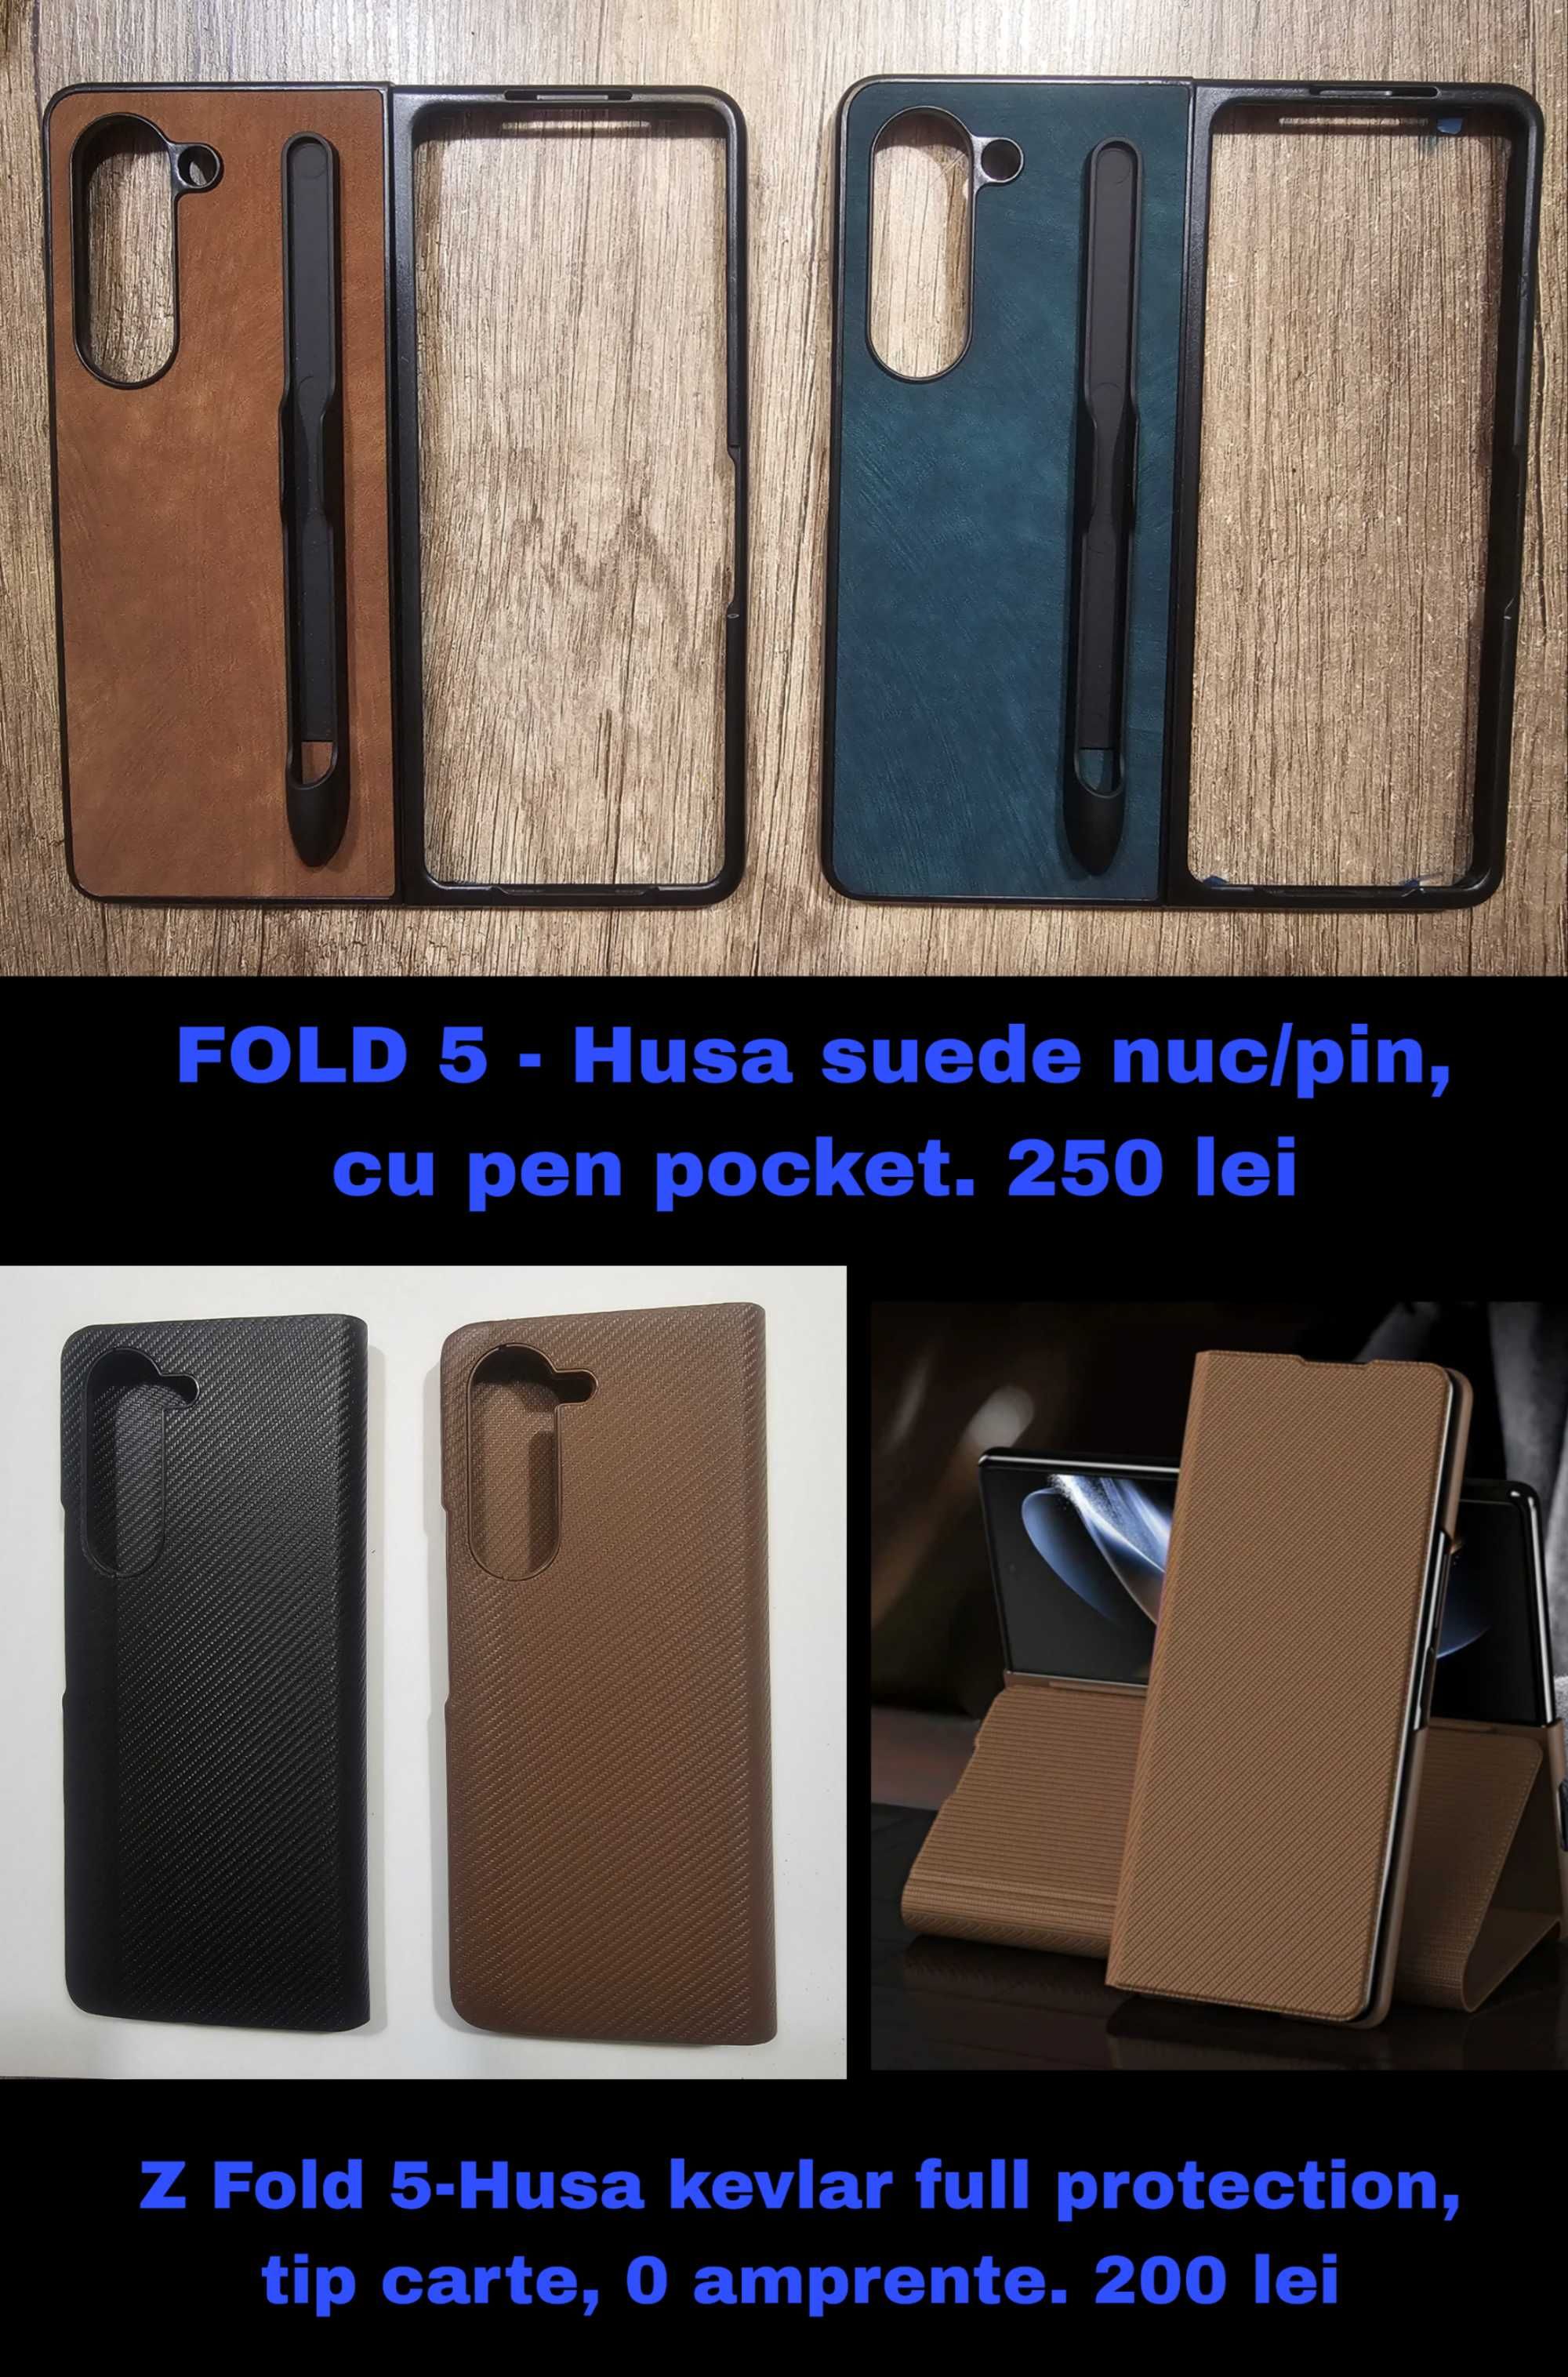 Z Fold 5 husa Premium